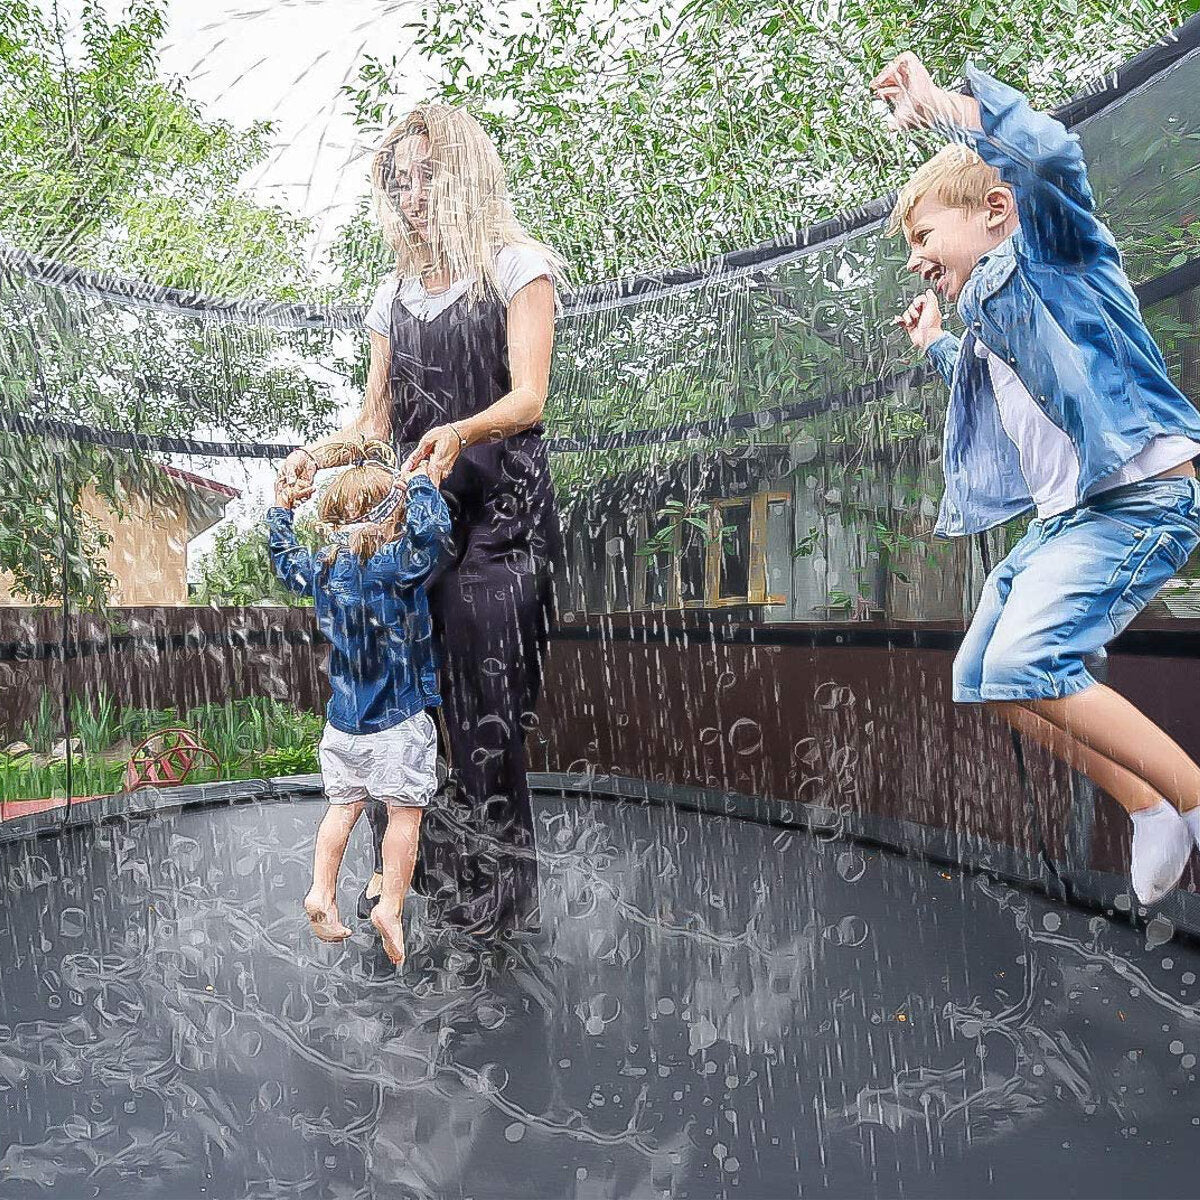 12 m sproeislang trampoline sprinkler waternevel kinderen outdoor enjoy zomer achtertuin waterpark spel